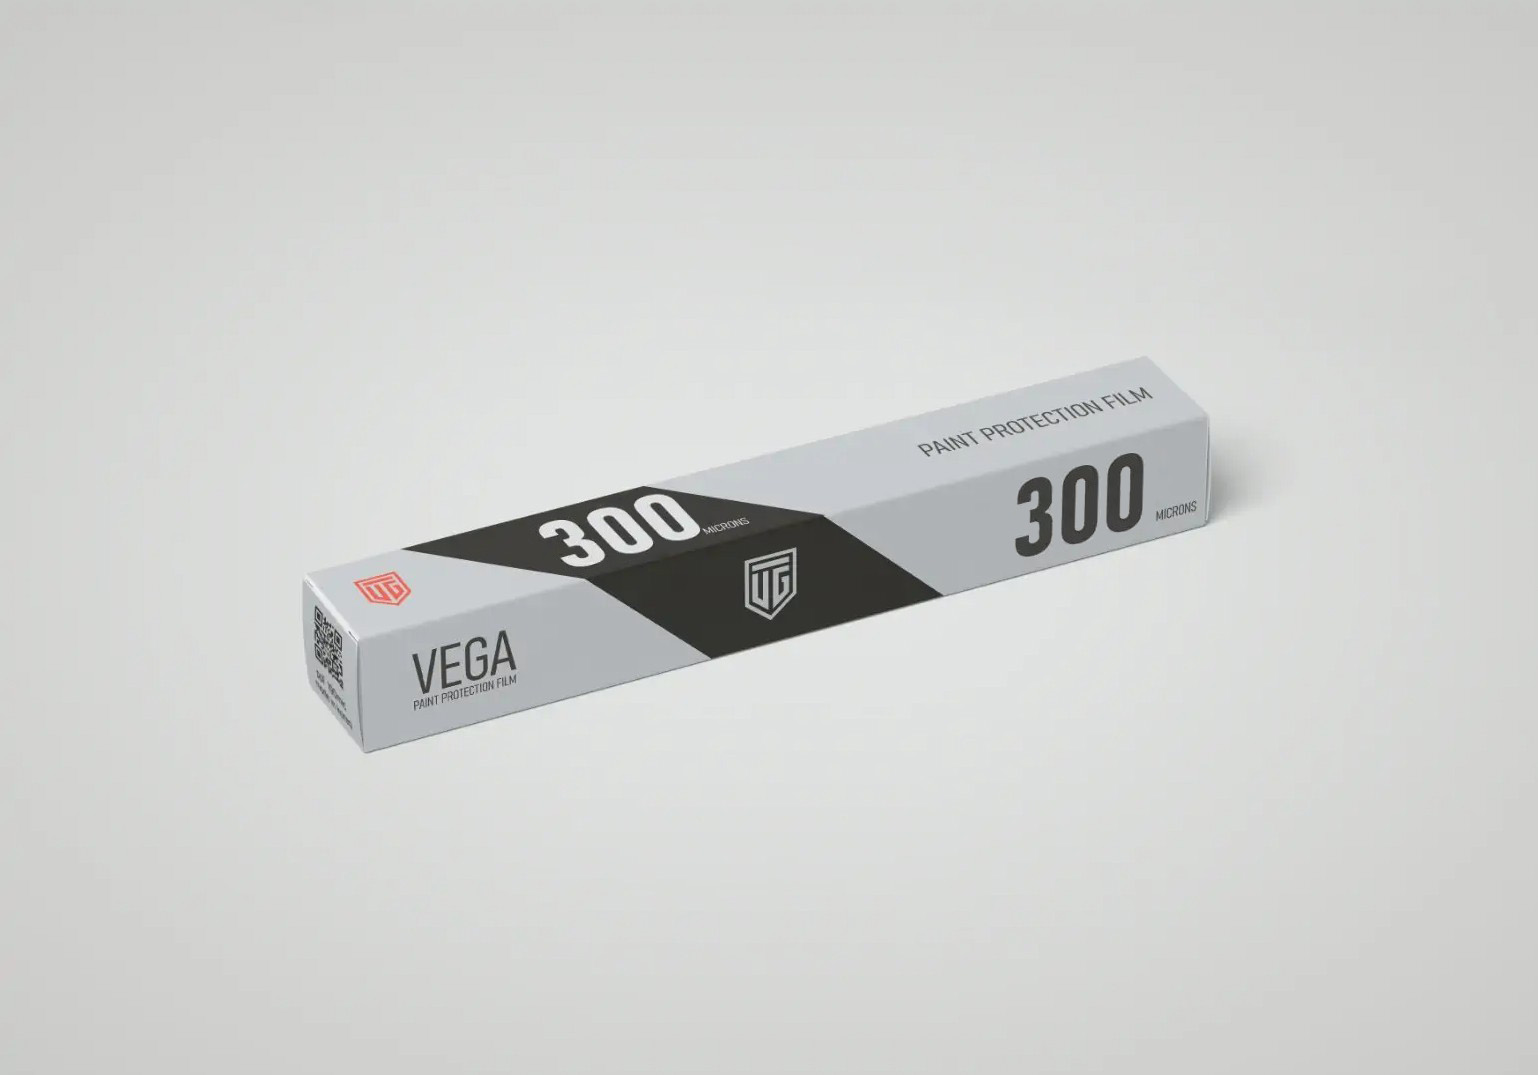 VEGA 300 HT series